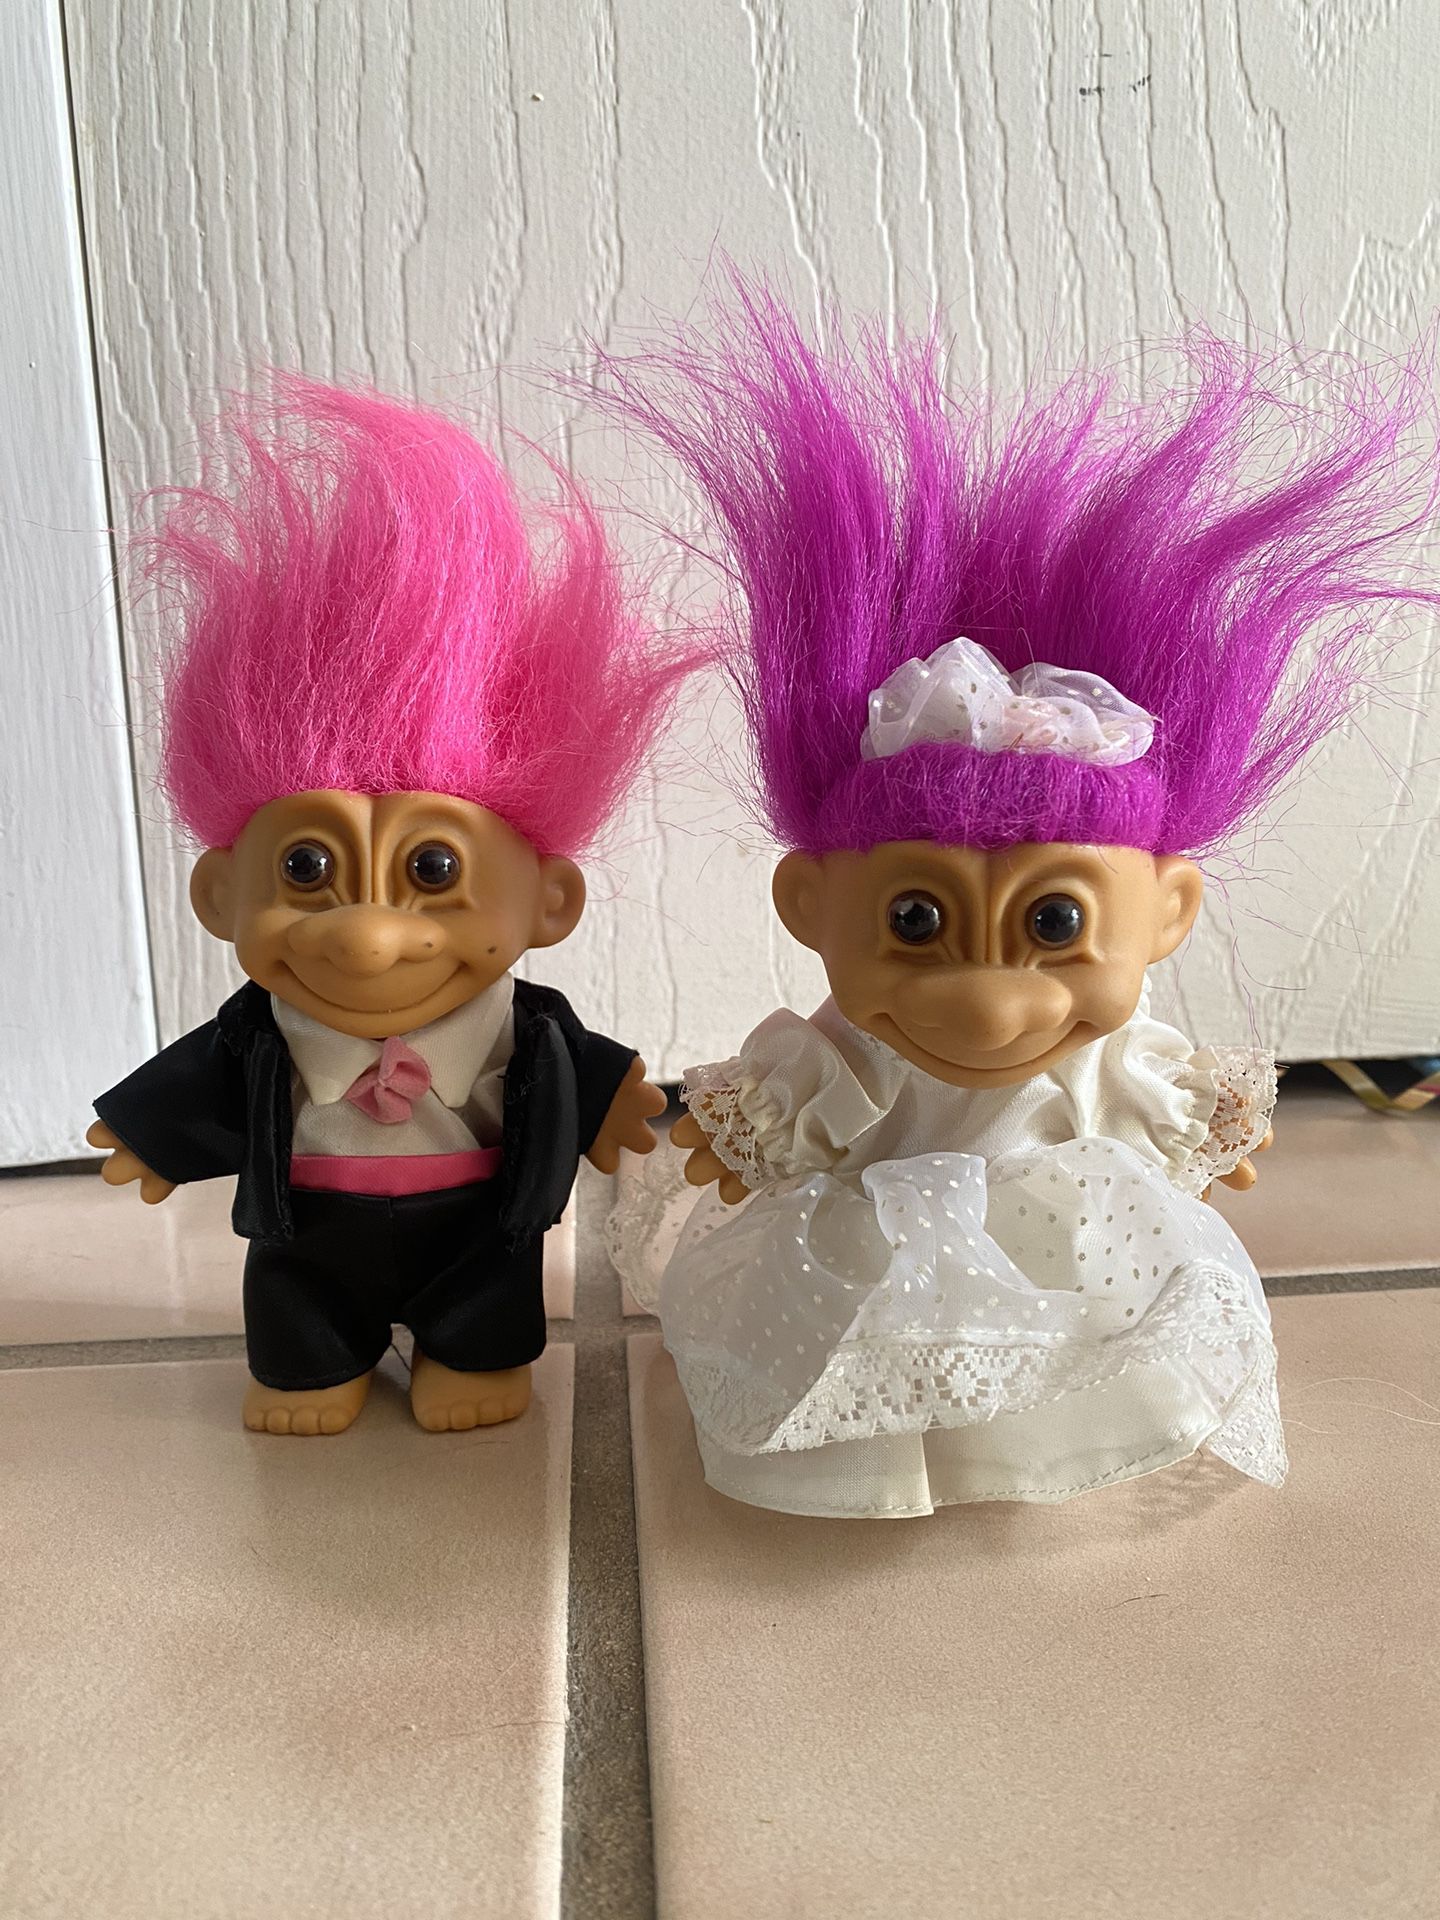 Trolls - Bride and Groom Figures